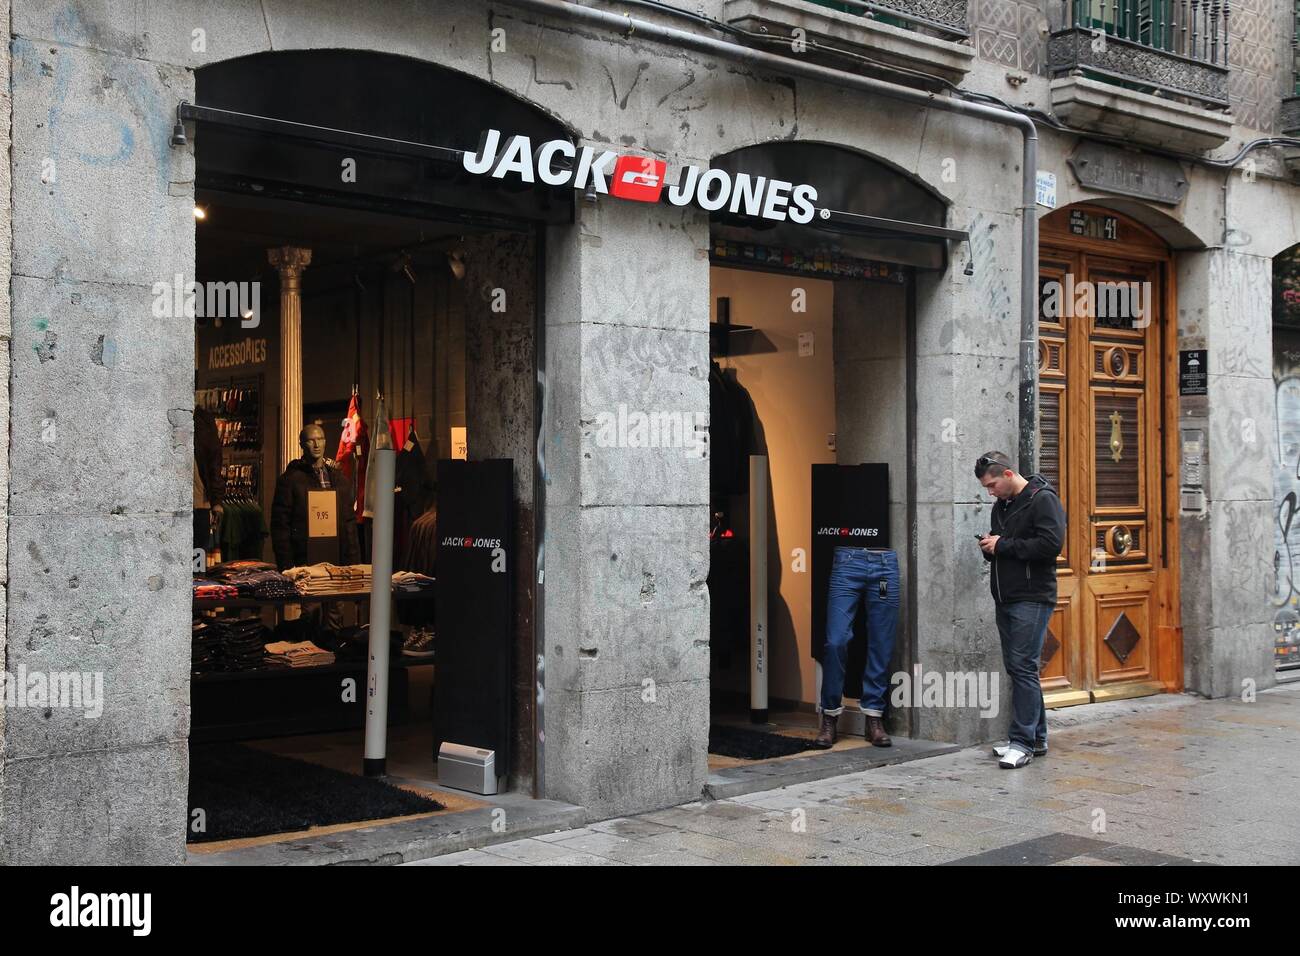 Jack And Jones Immagini e Fotos Stock - Alamy